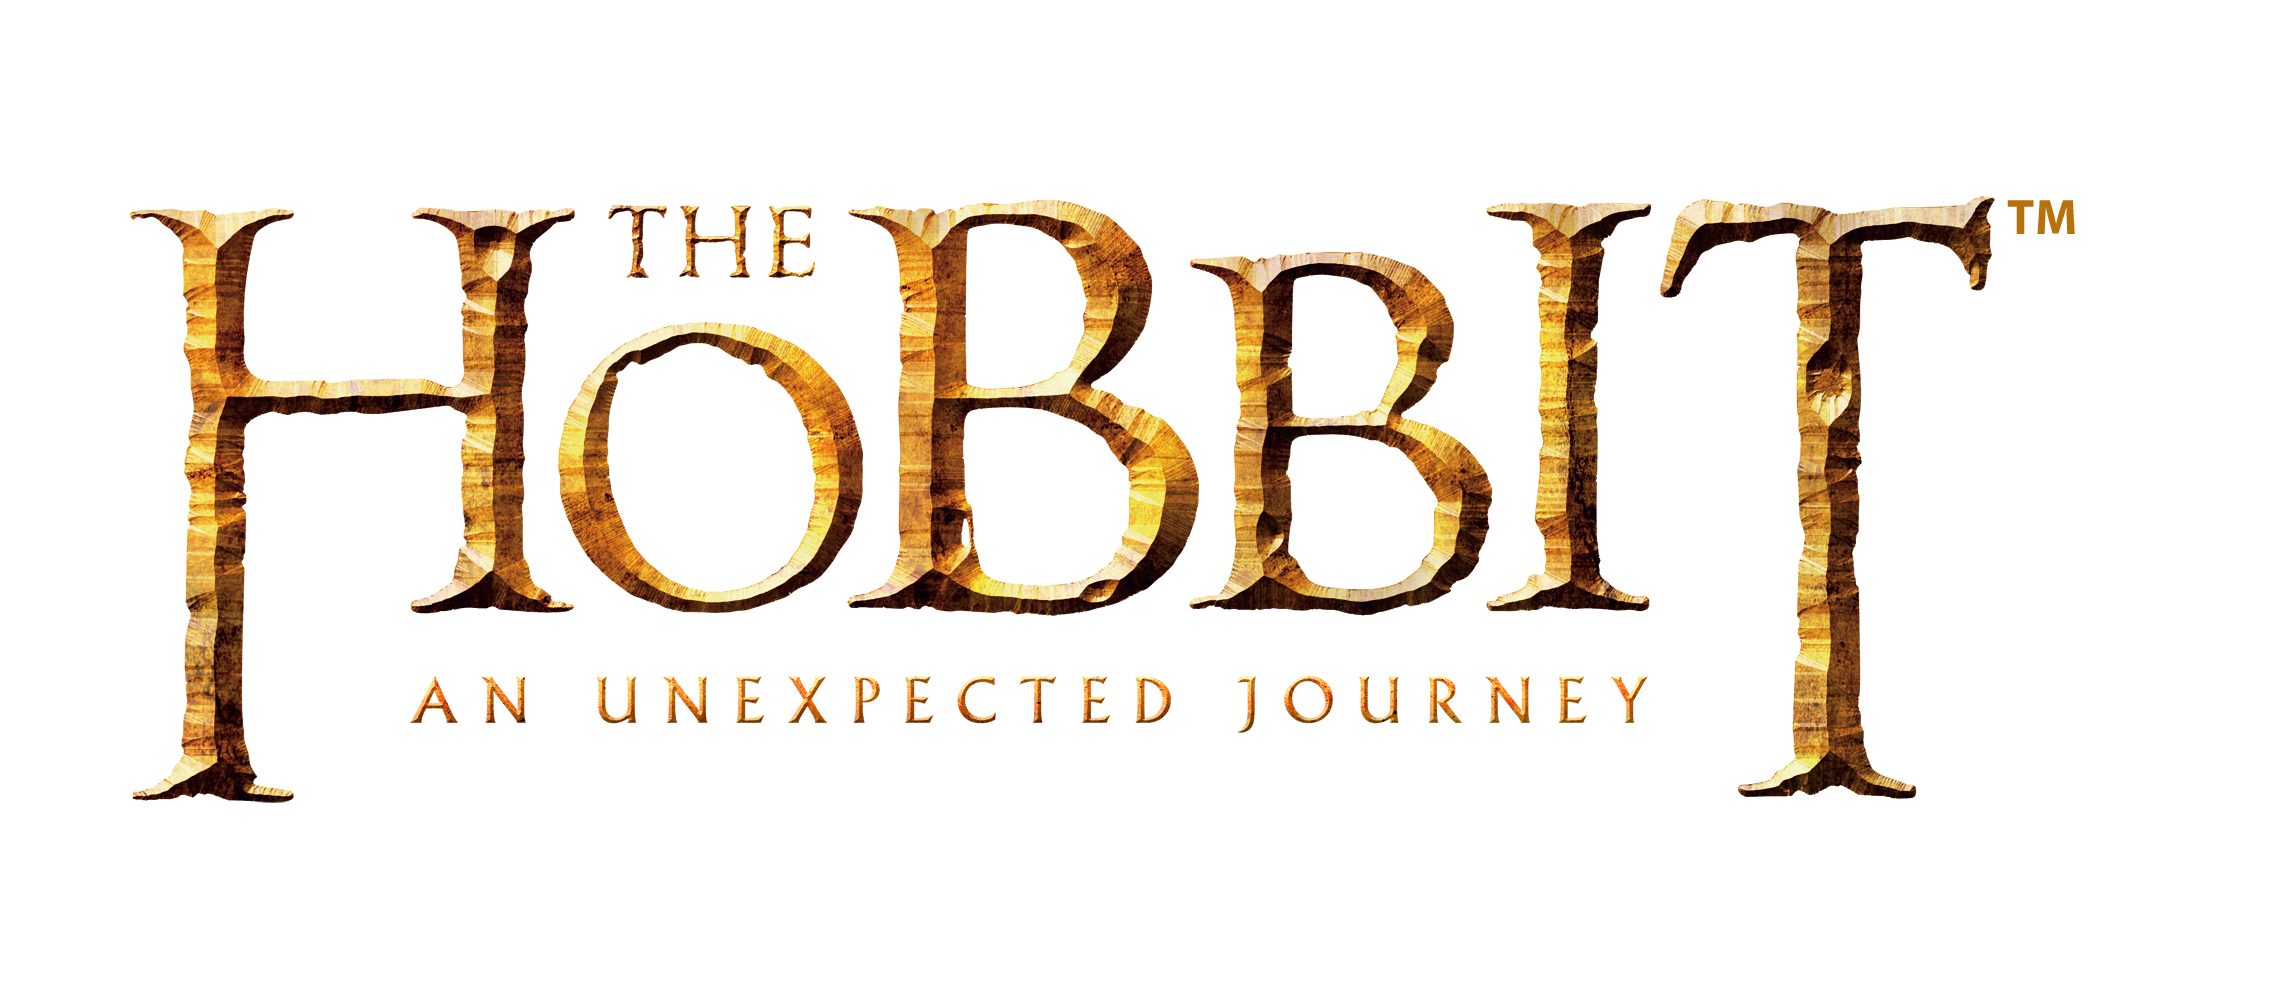 The Hobbit - An Unexpected Journey Logo